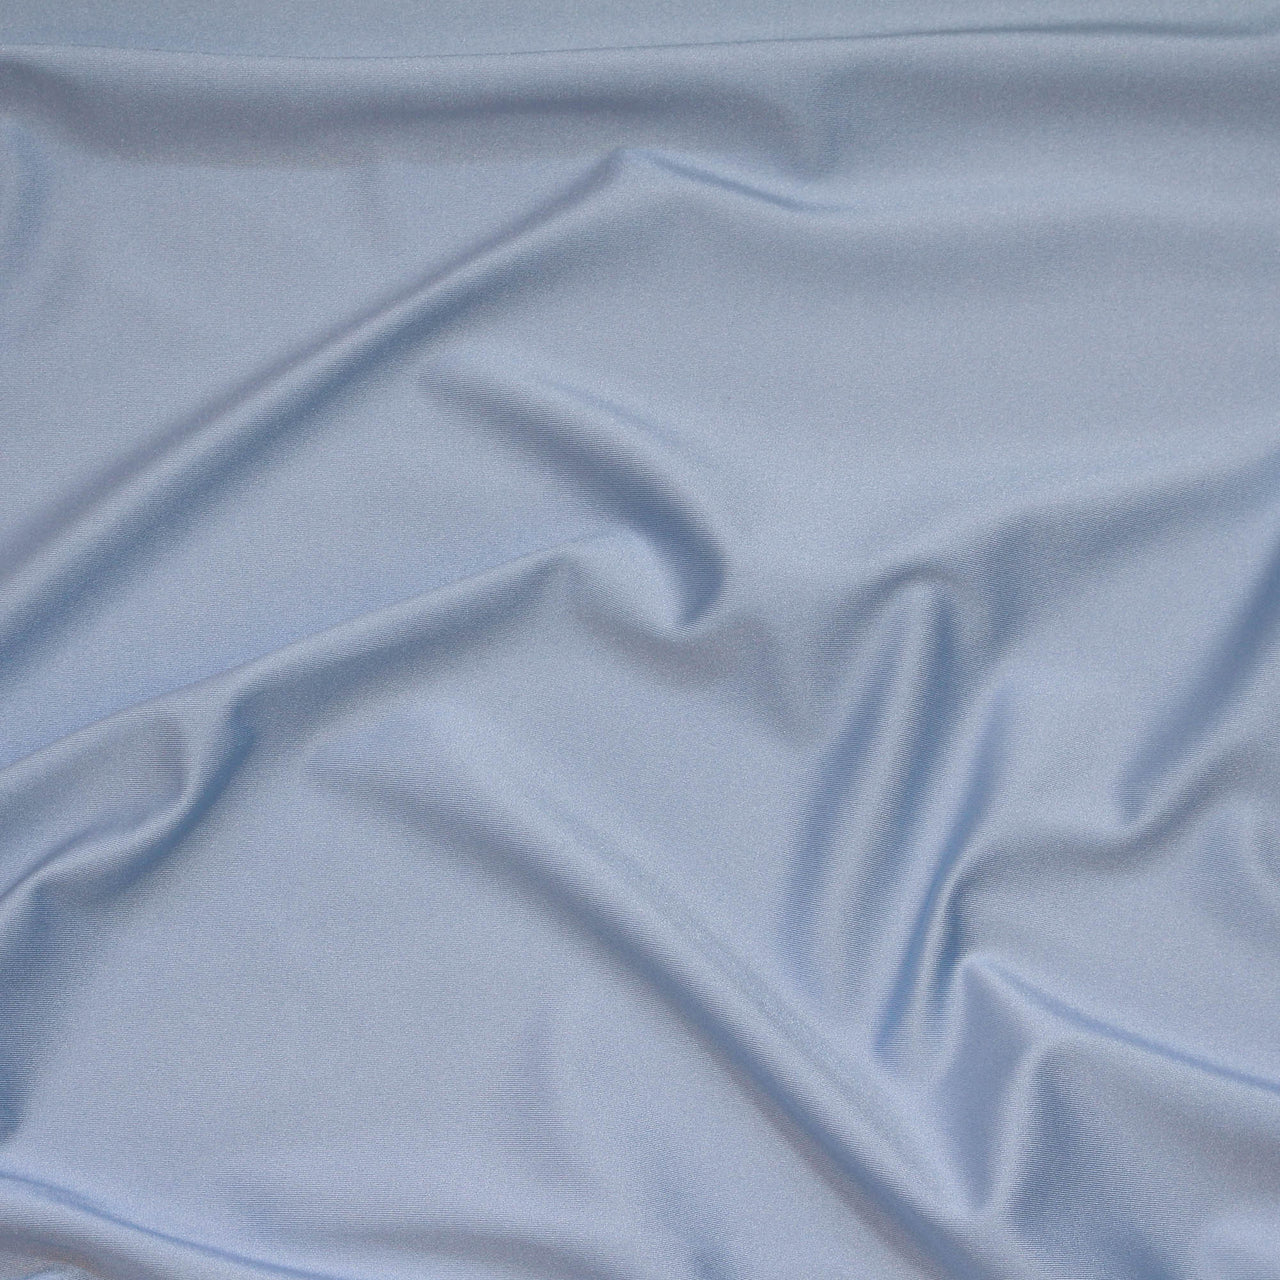 Baby Blue - Nylon Spandex Fabric - 4 Way All Way Stretch Superior Quality - Leotards, Dancewear